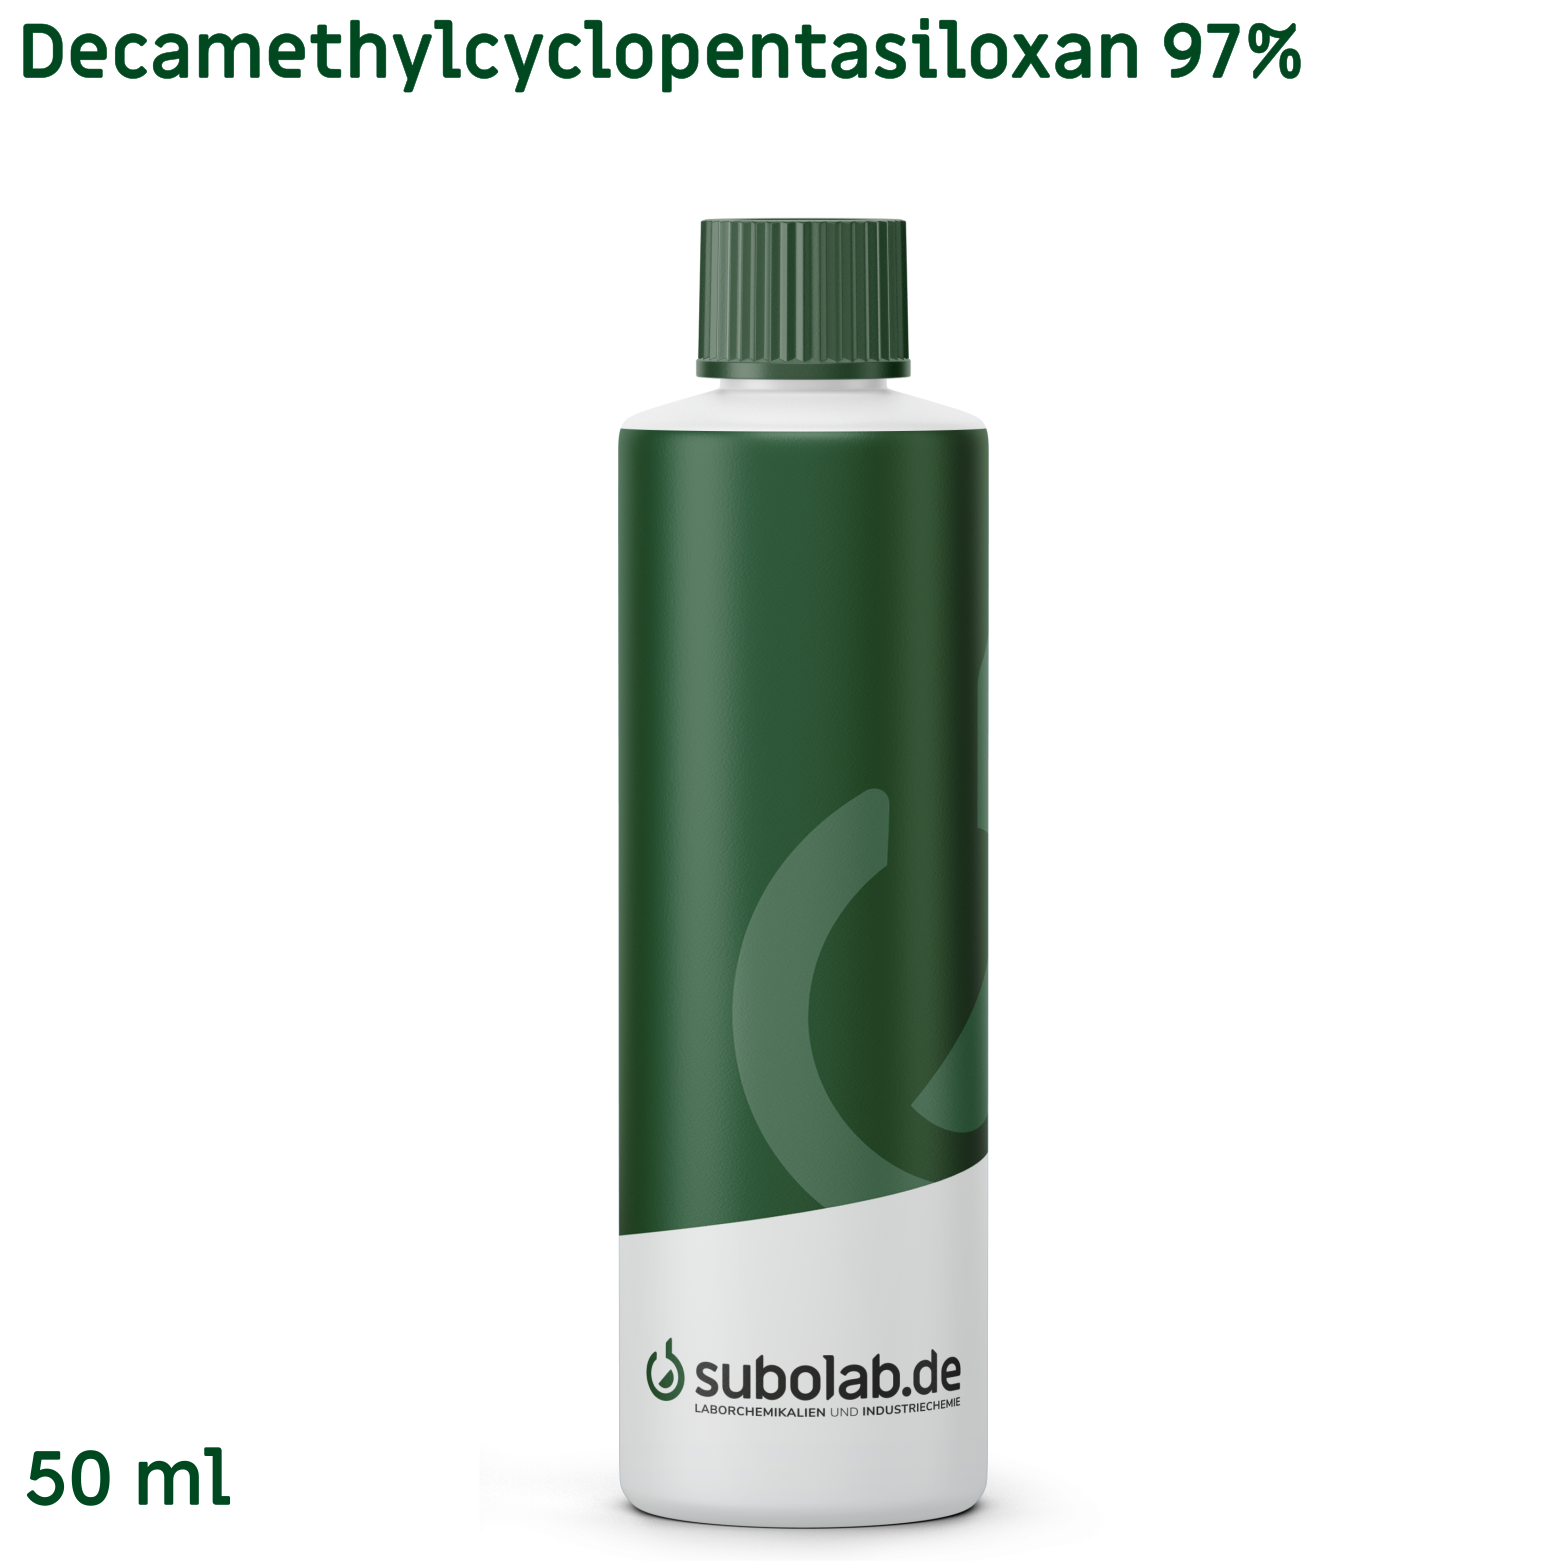 Bild von Decamethylcyclopentasiloxan 97% (50 ml)